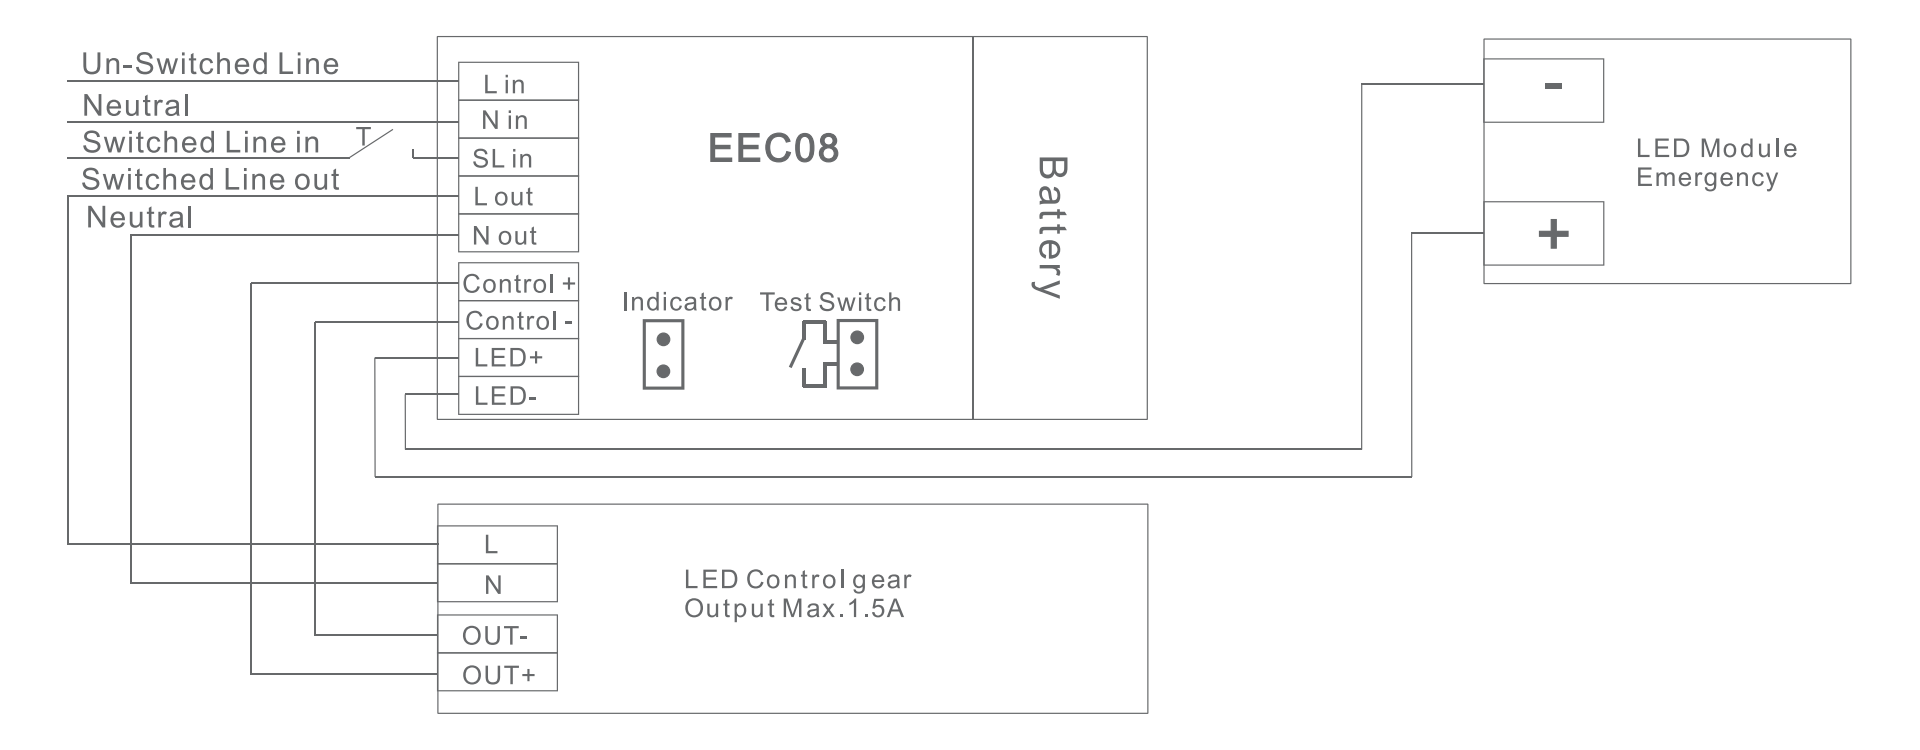 Panel light LED emergency modules